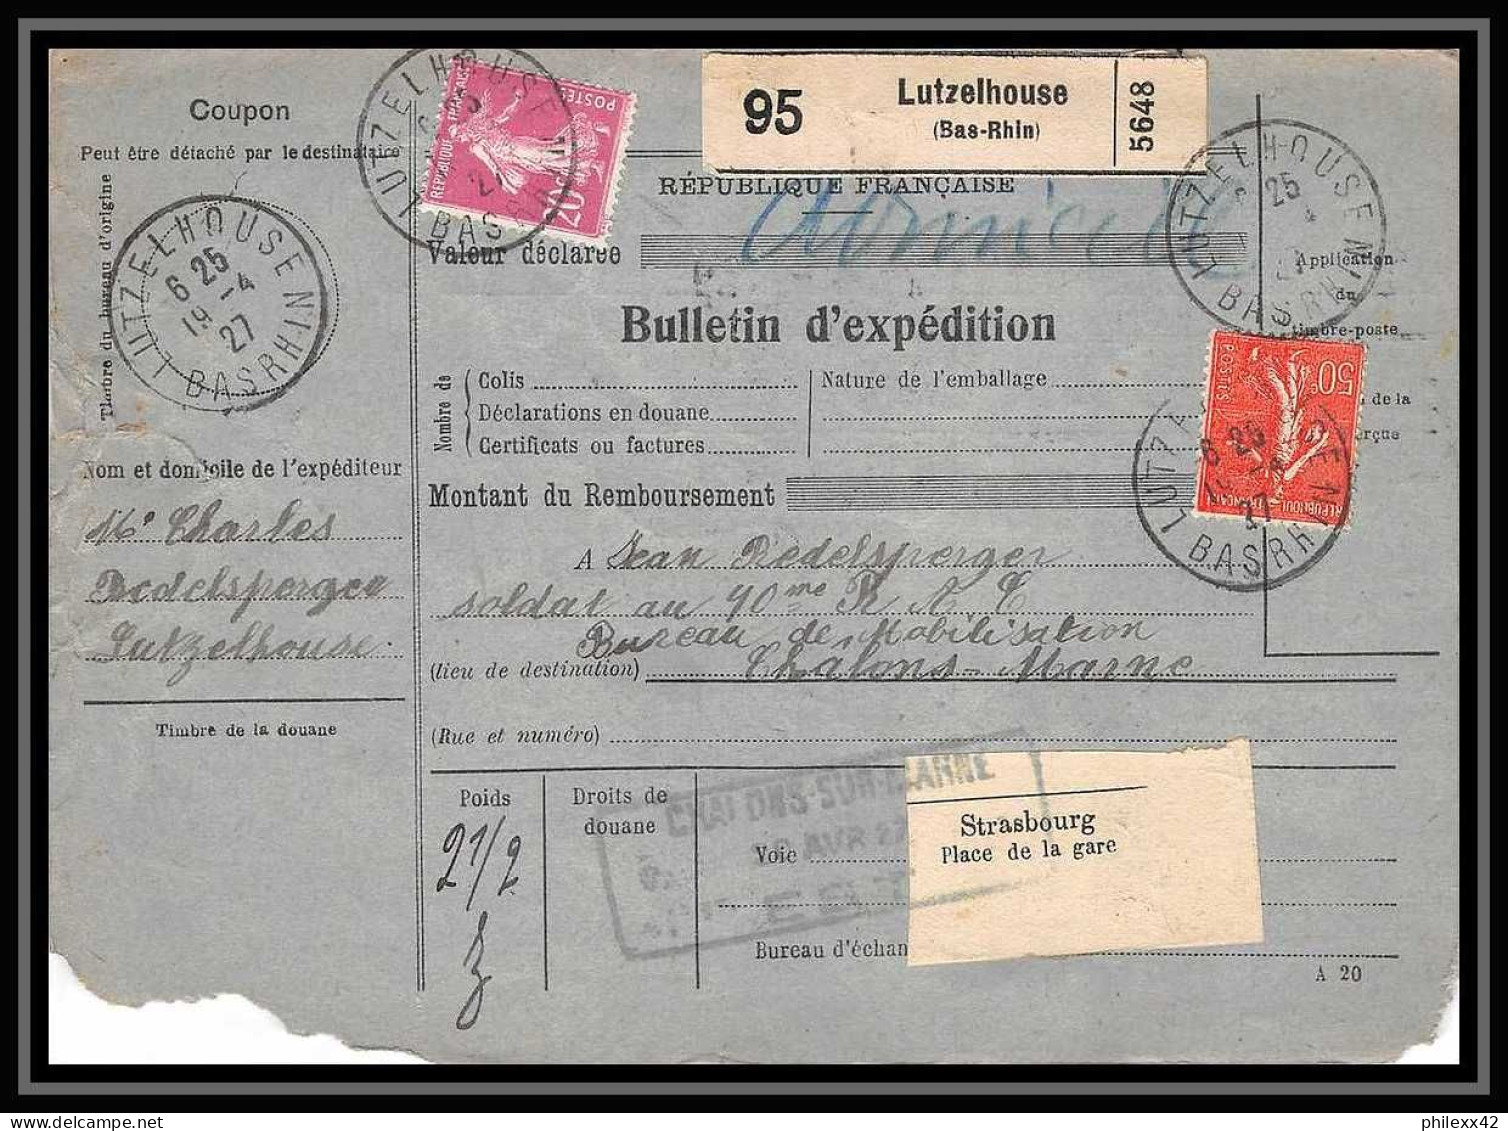 25095 Bulletin D'expédition France Colis Postaux Fiscal Bas Rhin - 1927 Lutzelhouse Merson 145 Alsace-Lorraine  - Covers & Documents